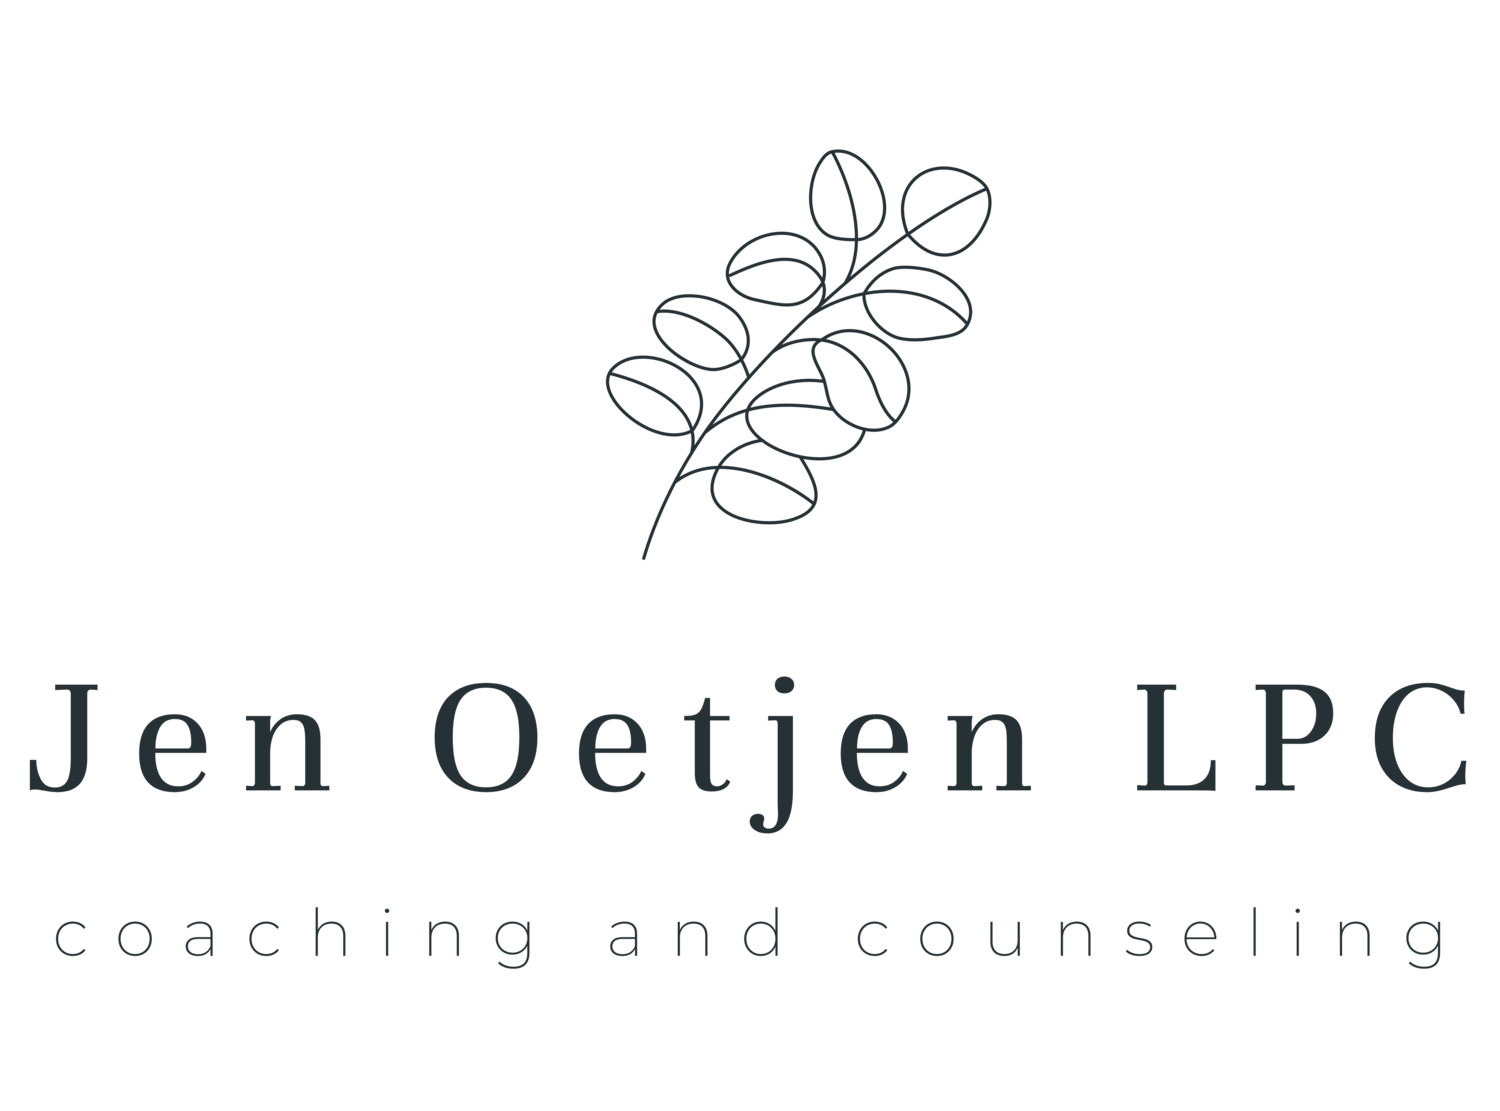 Jen Oetjen LPC, Christian Therapist Counselor Coach